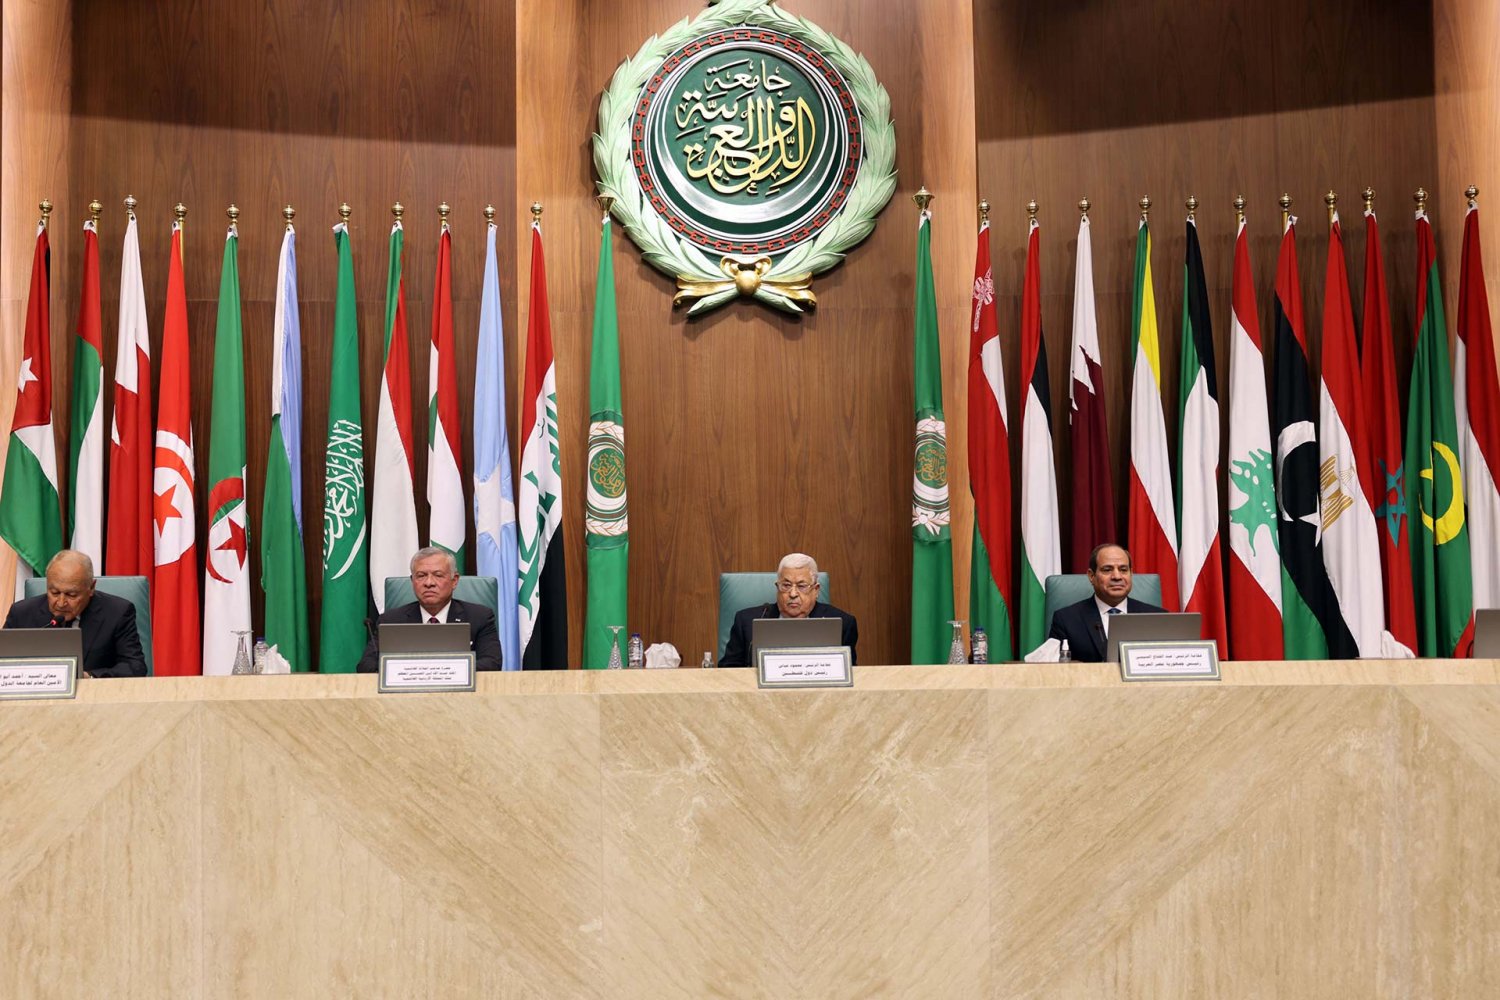 King Abdullah of Jordan, Palestinian President Mahmoud Abbas, and Egyptian President Abdel Fatah el-Sisi